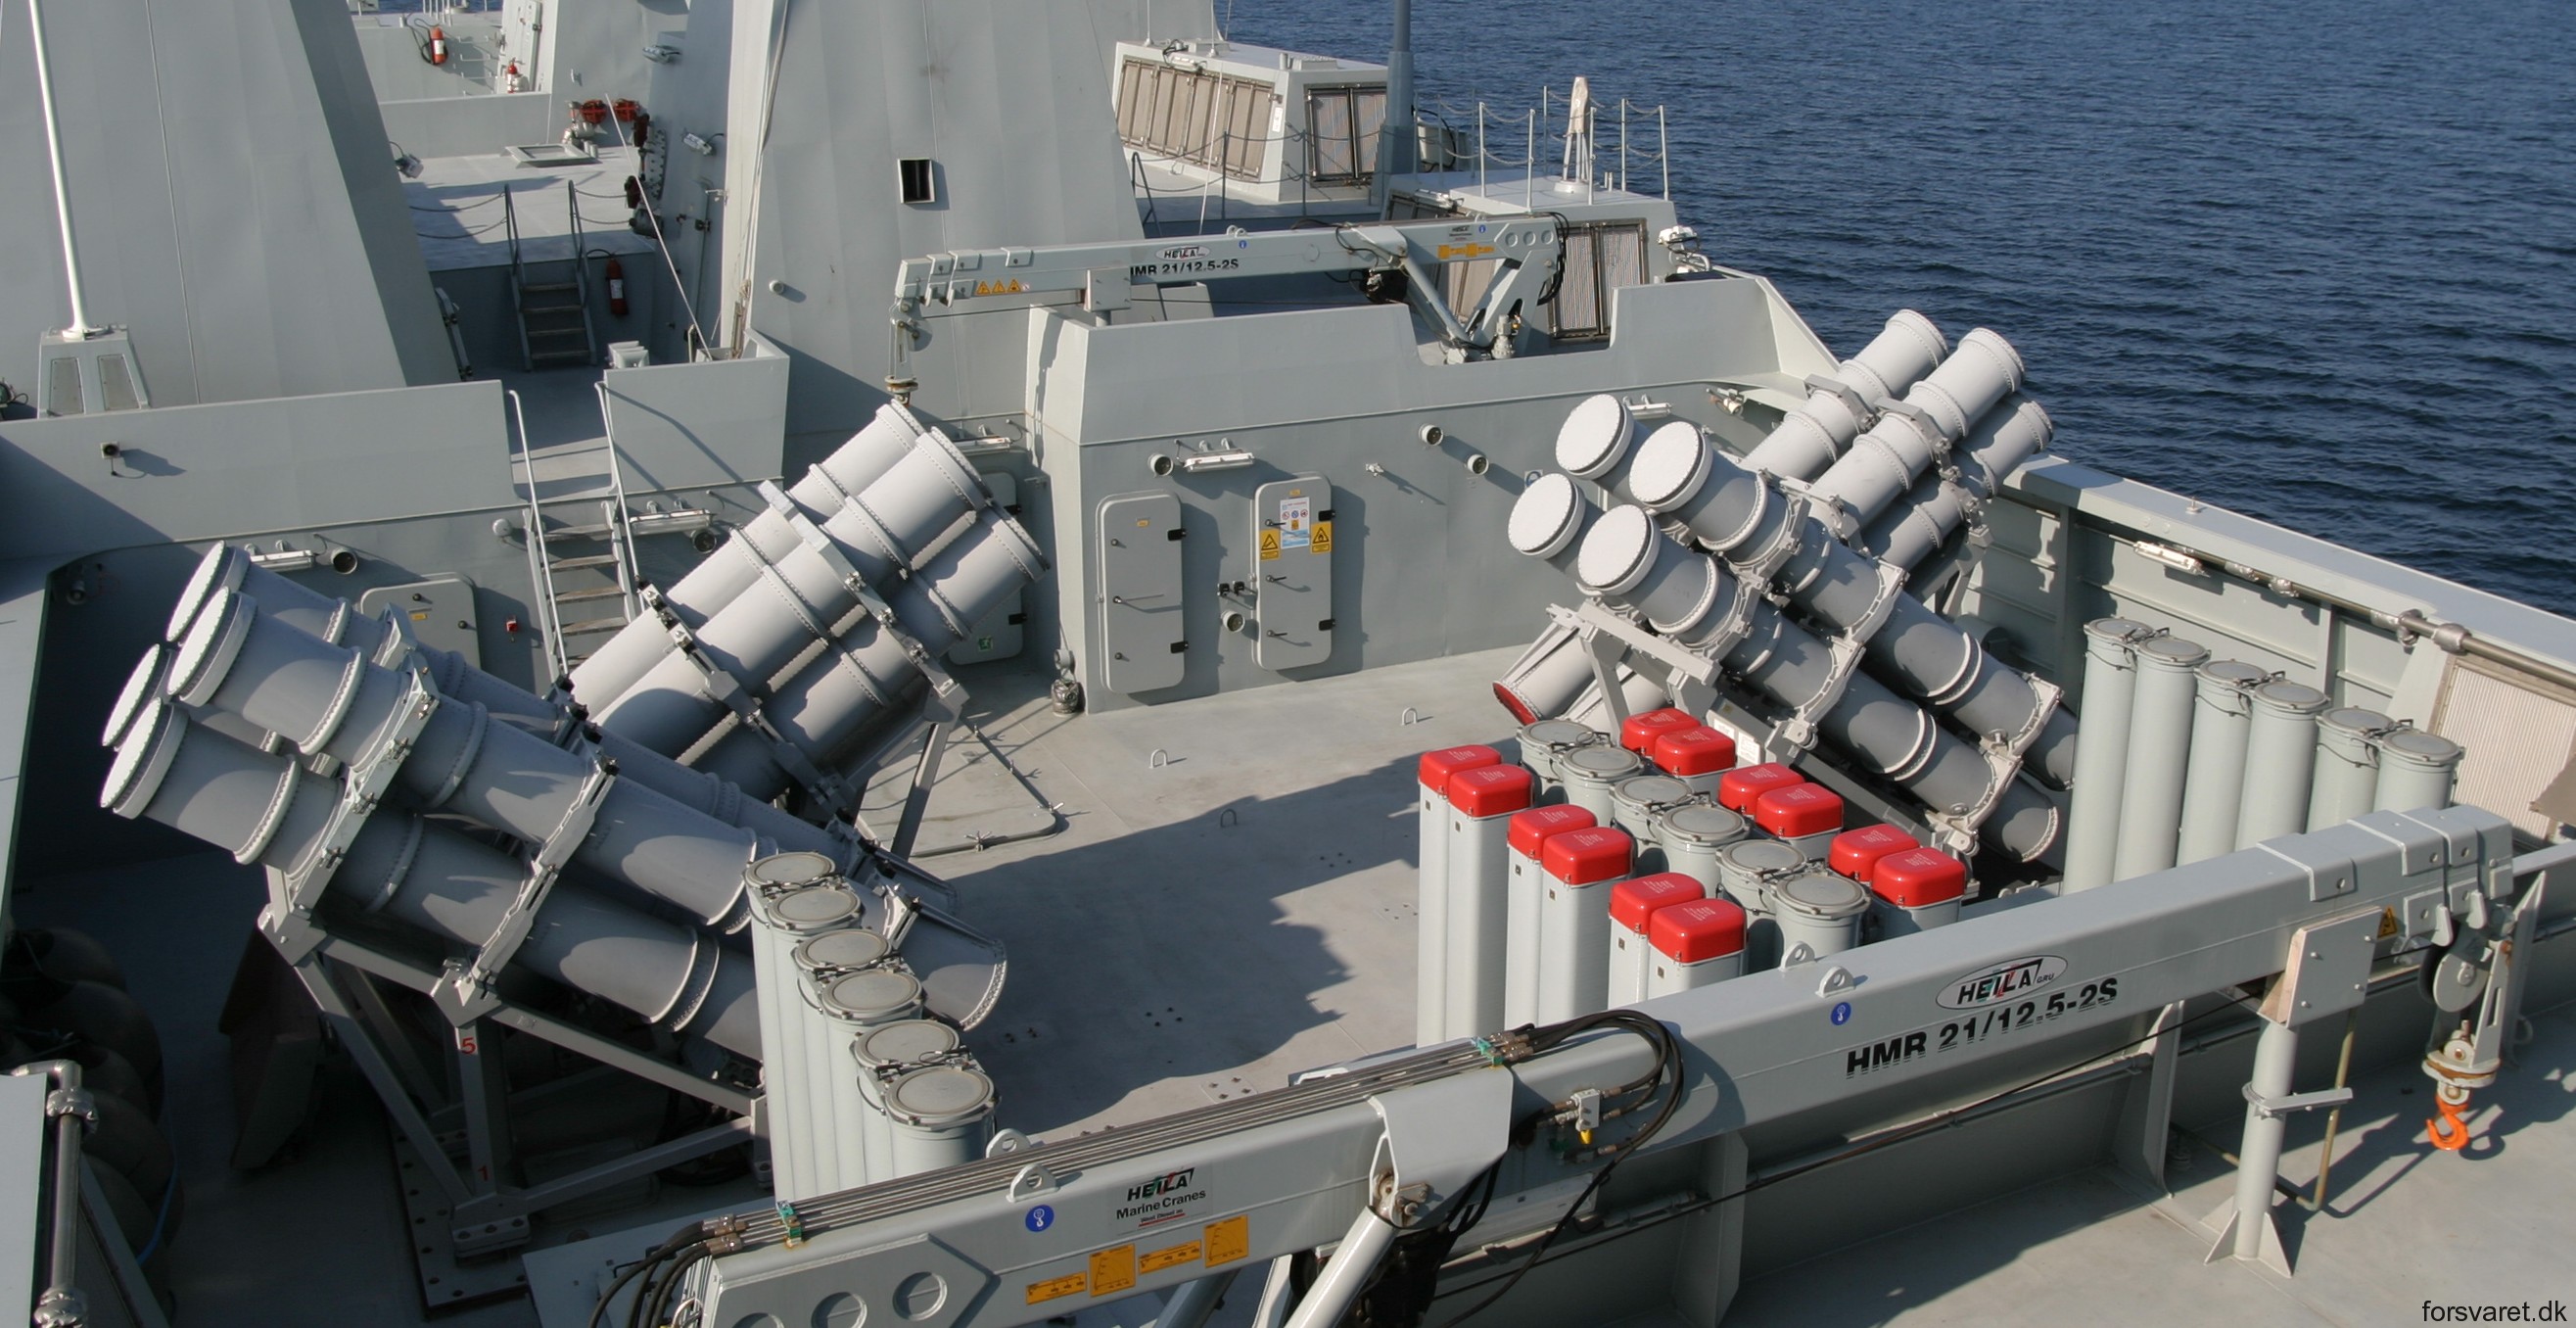 absalon class frigate command support ship royal danish navy 78x stanflex weapon deck mk.141 launcher mk.56 vls rim-162 essm missile